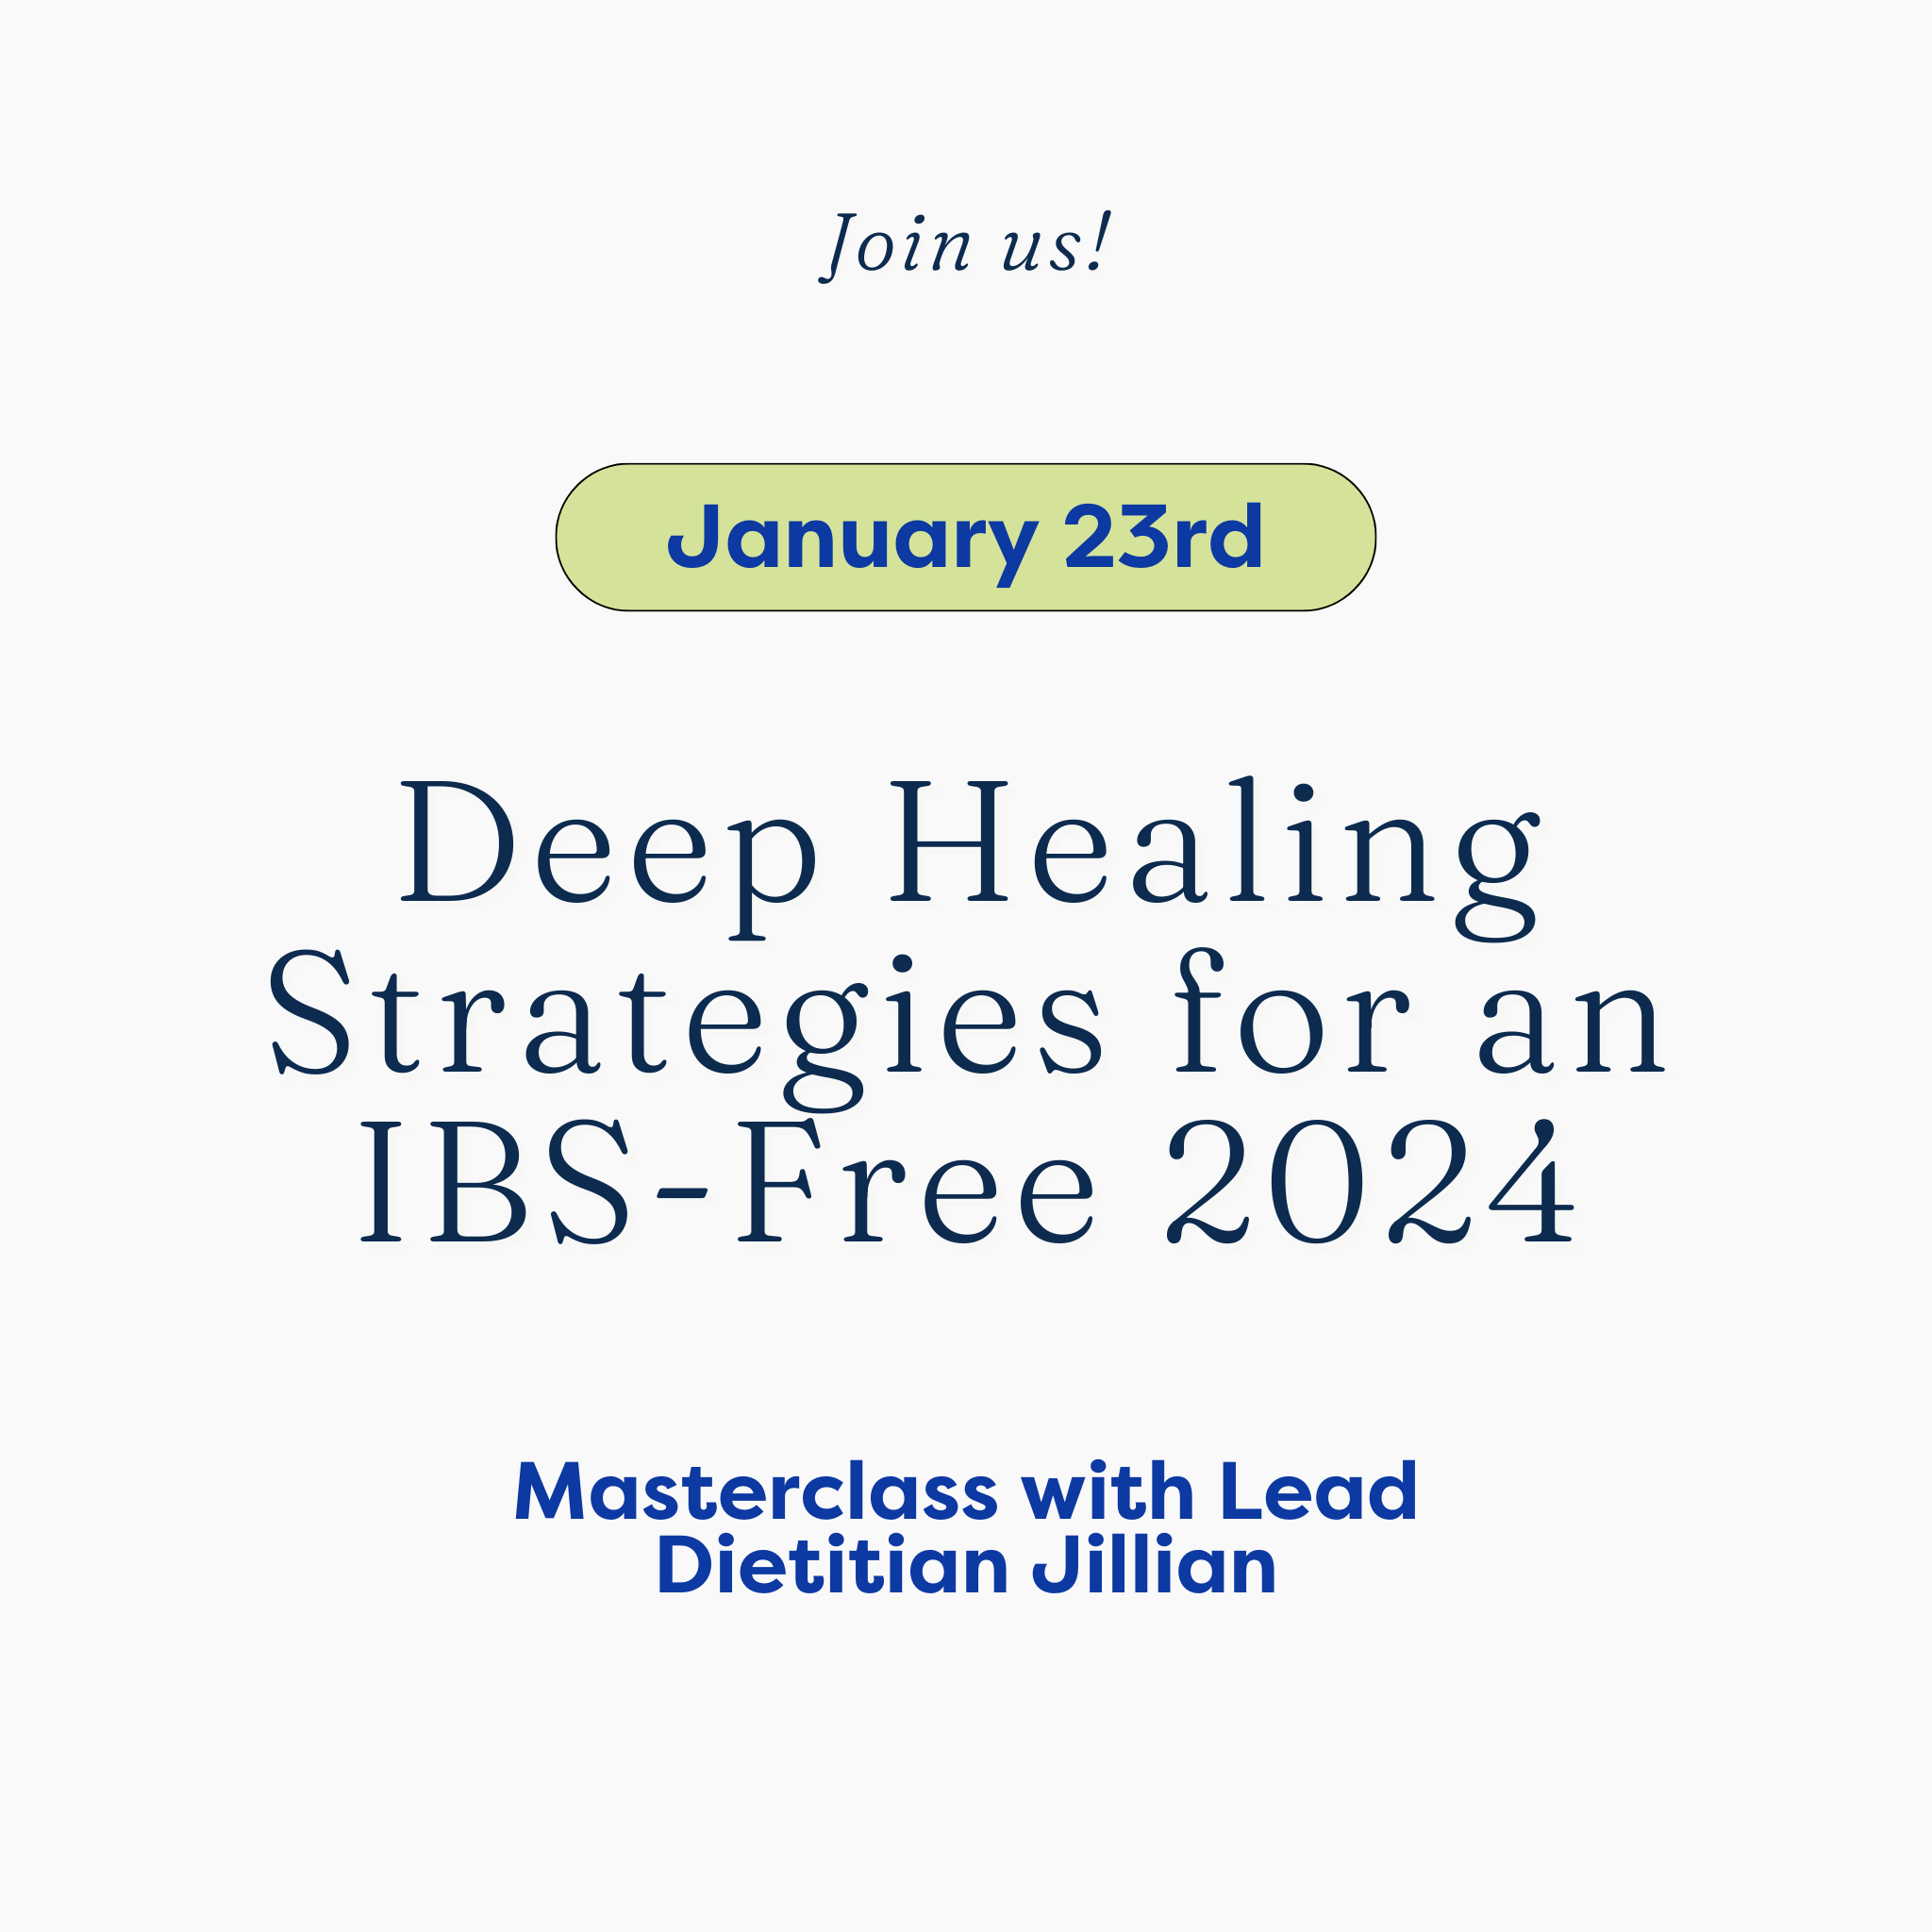 Deep Healing Strategies for an IBS-Free 2024